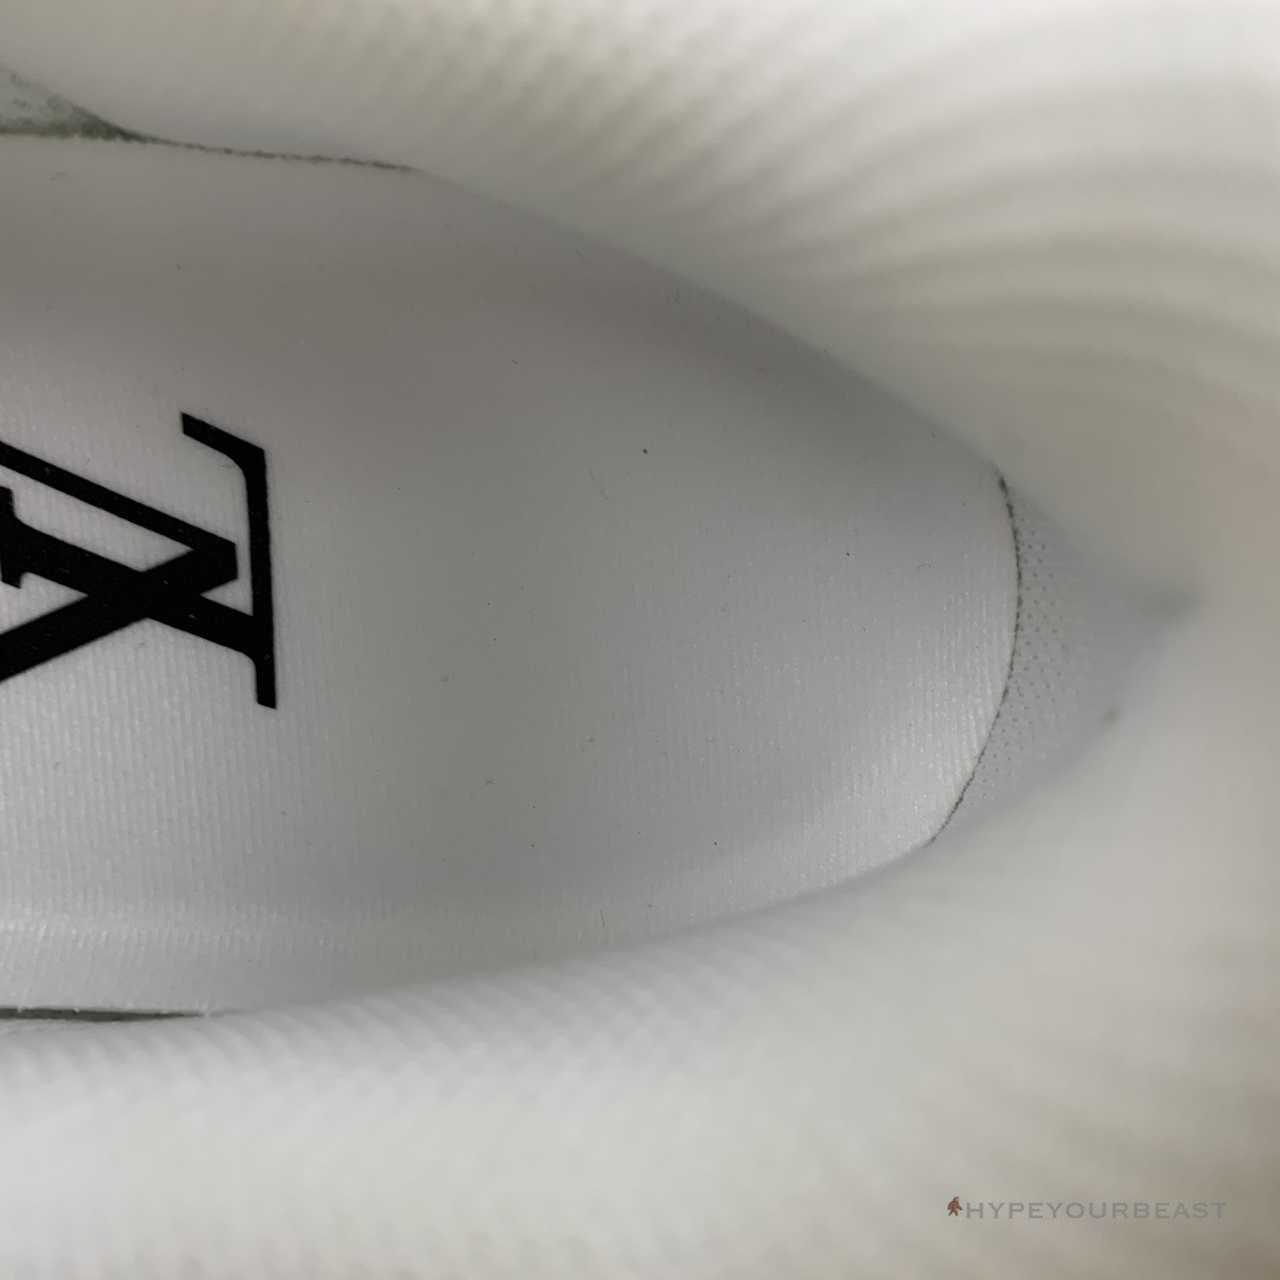 Nike Air Force 1 Low 'LV Monogram White Off-White'